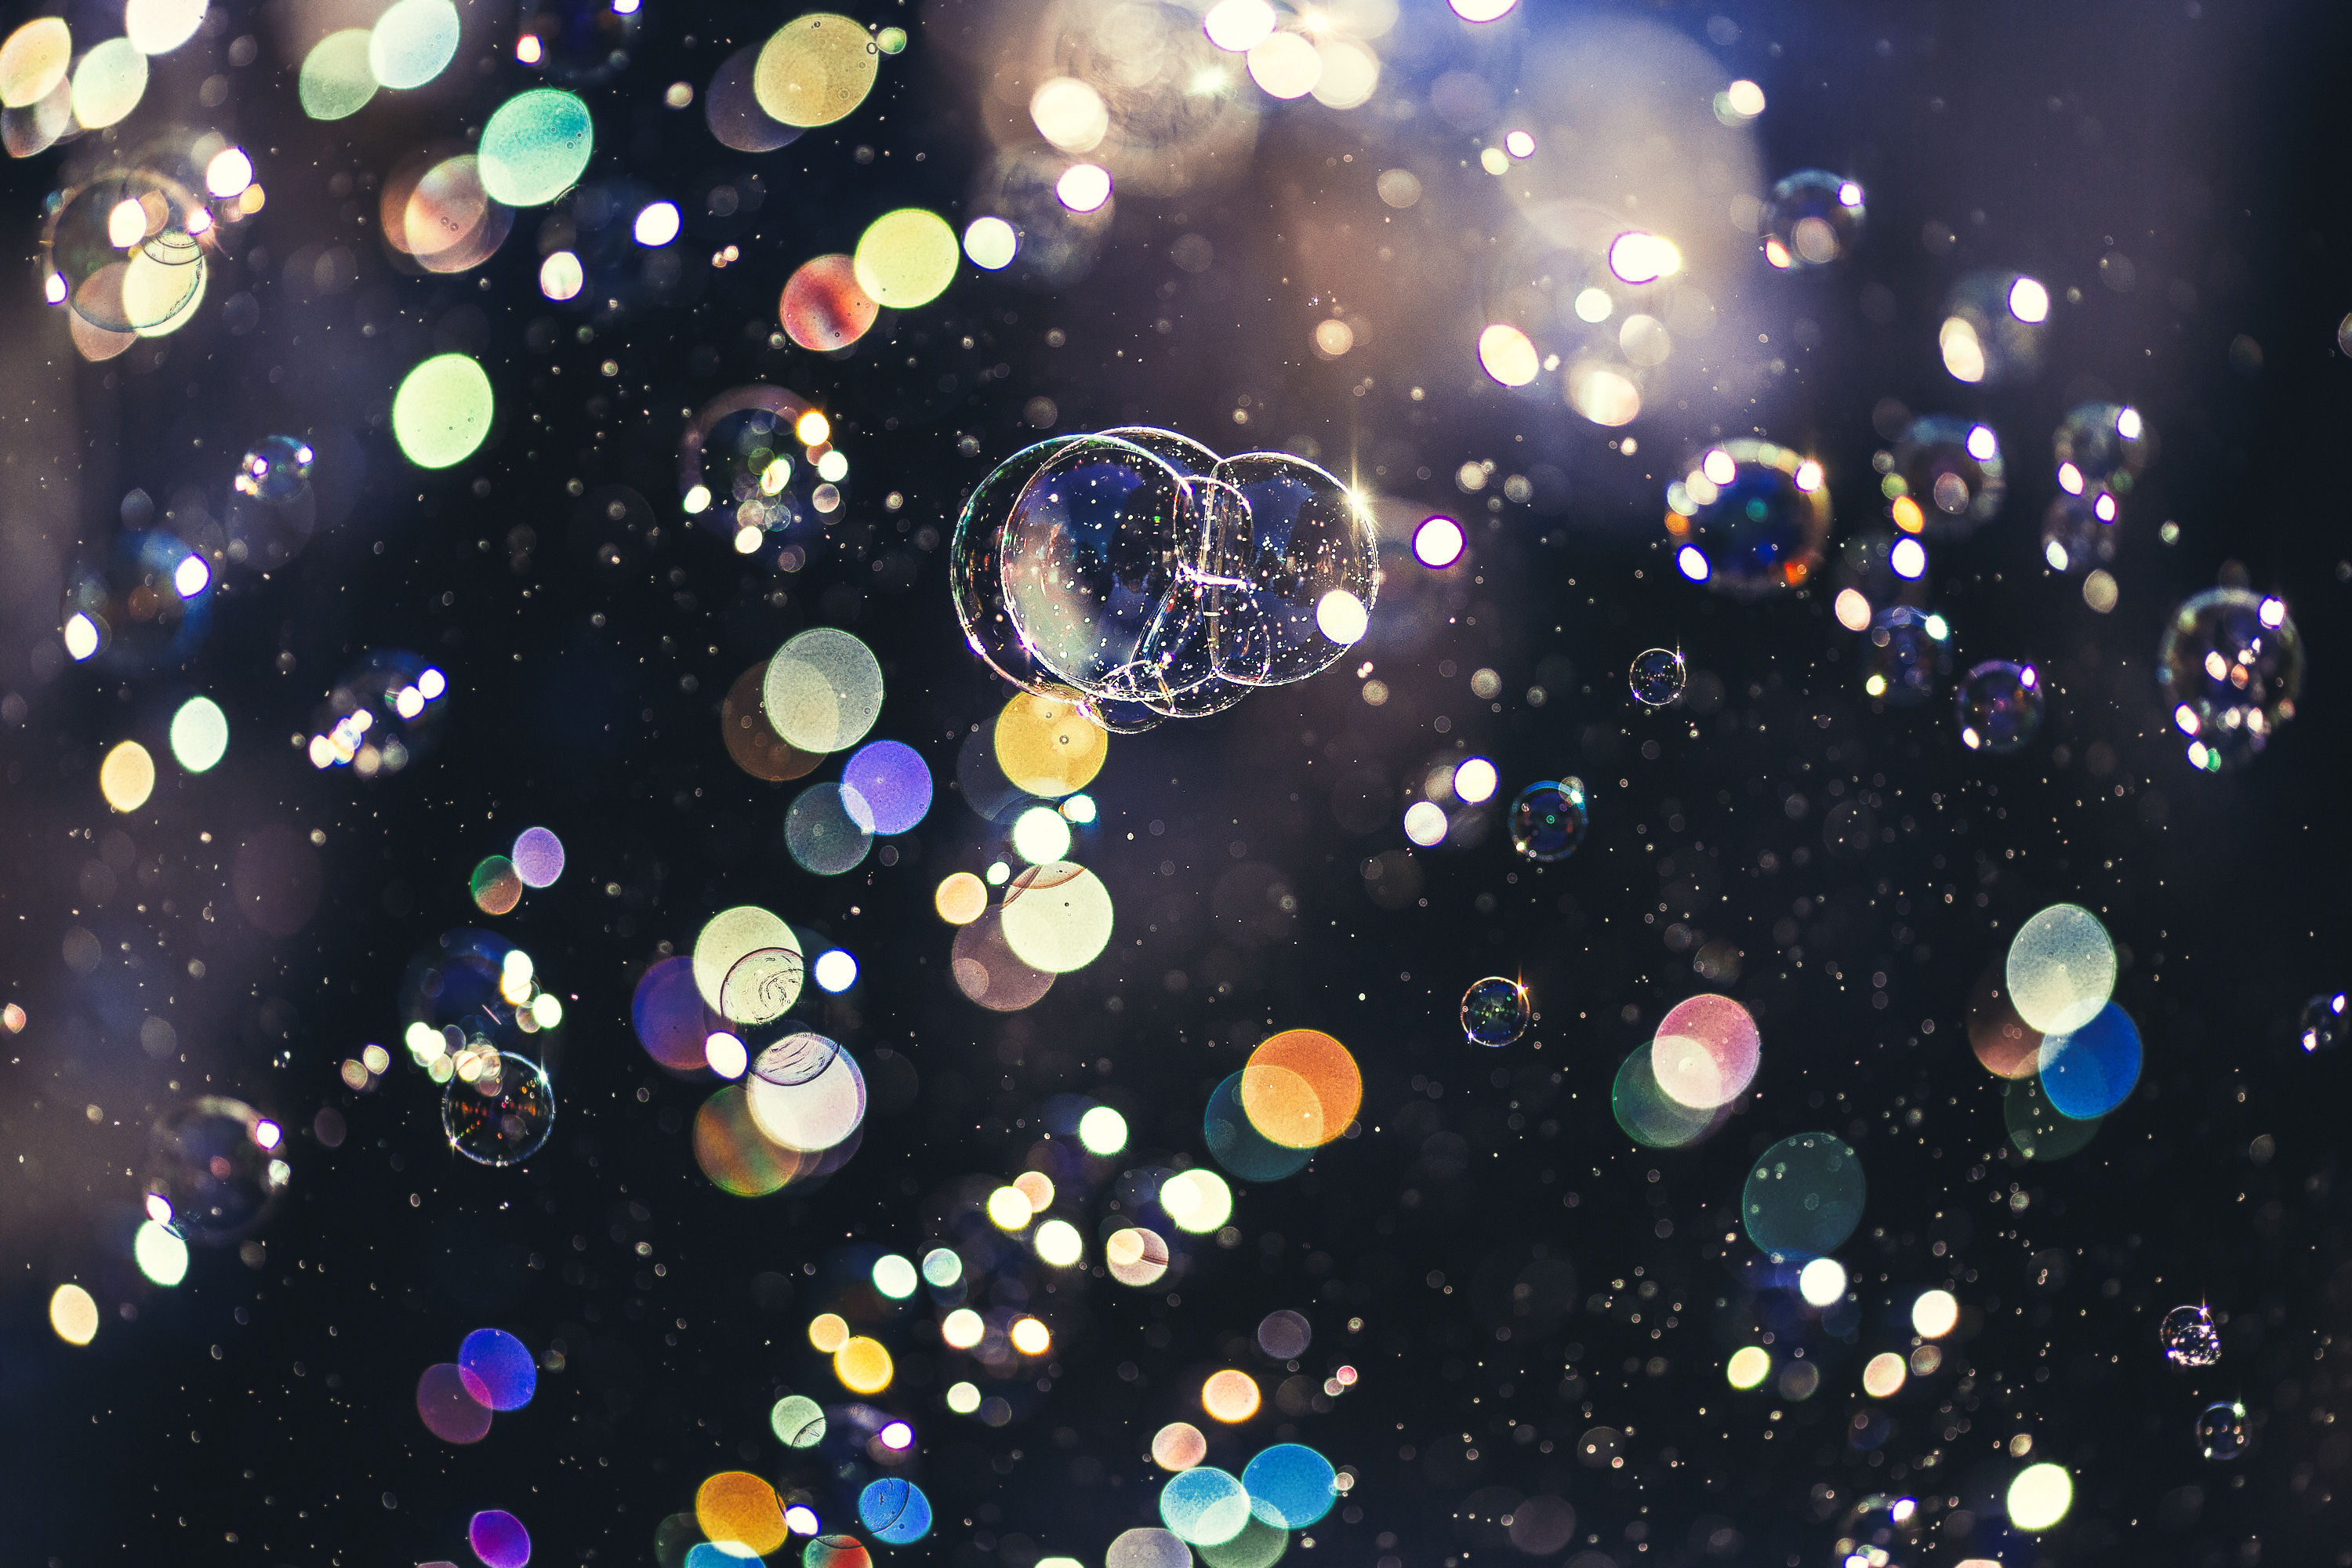 Bubbles @ Slottsfjell